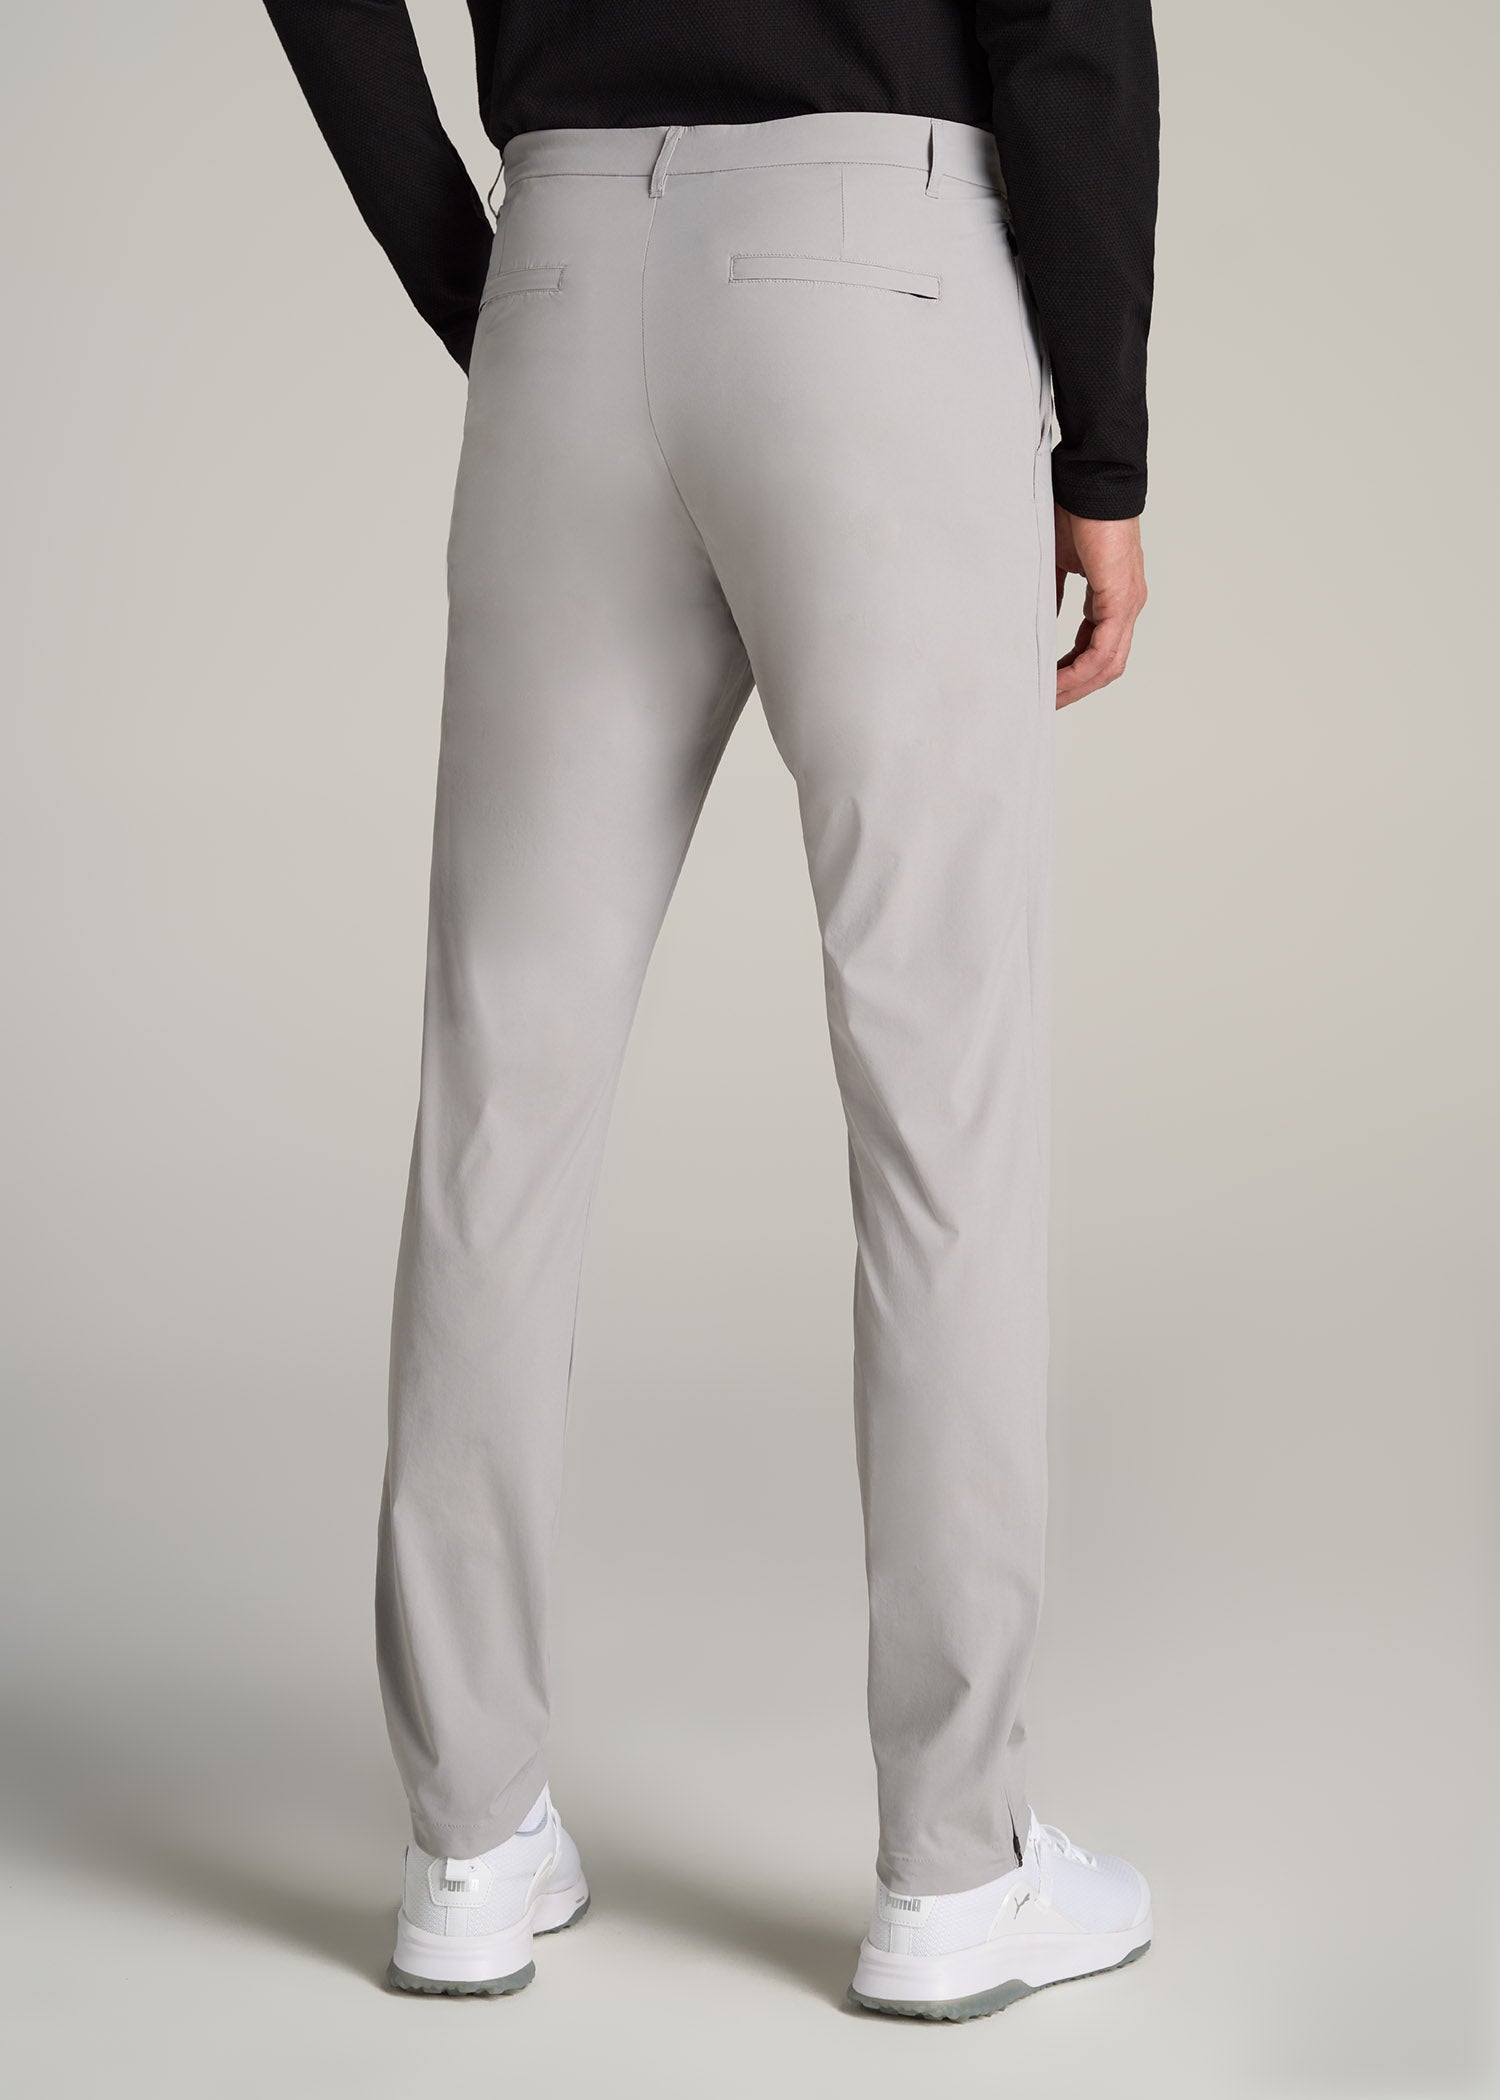 Lululemon Commission Pants Men 32 x 29 Light Grey Slim Fit